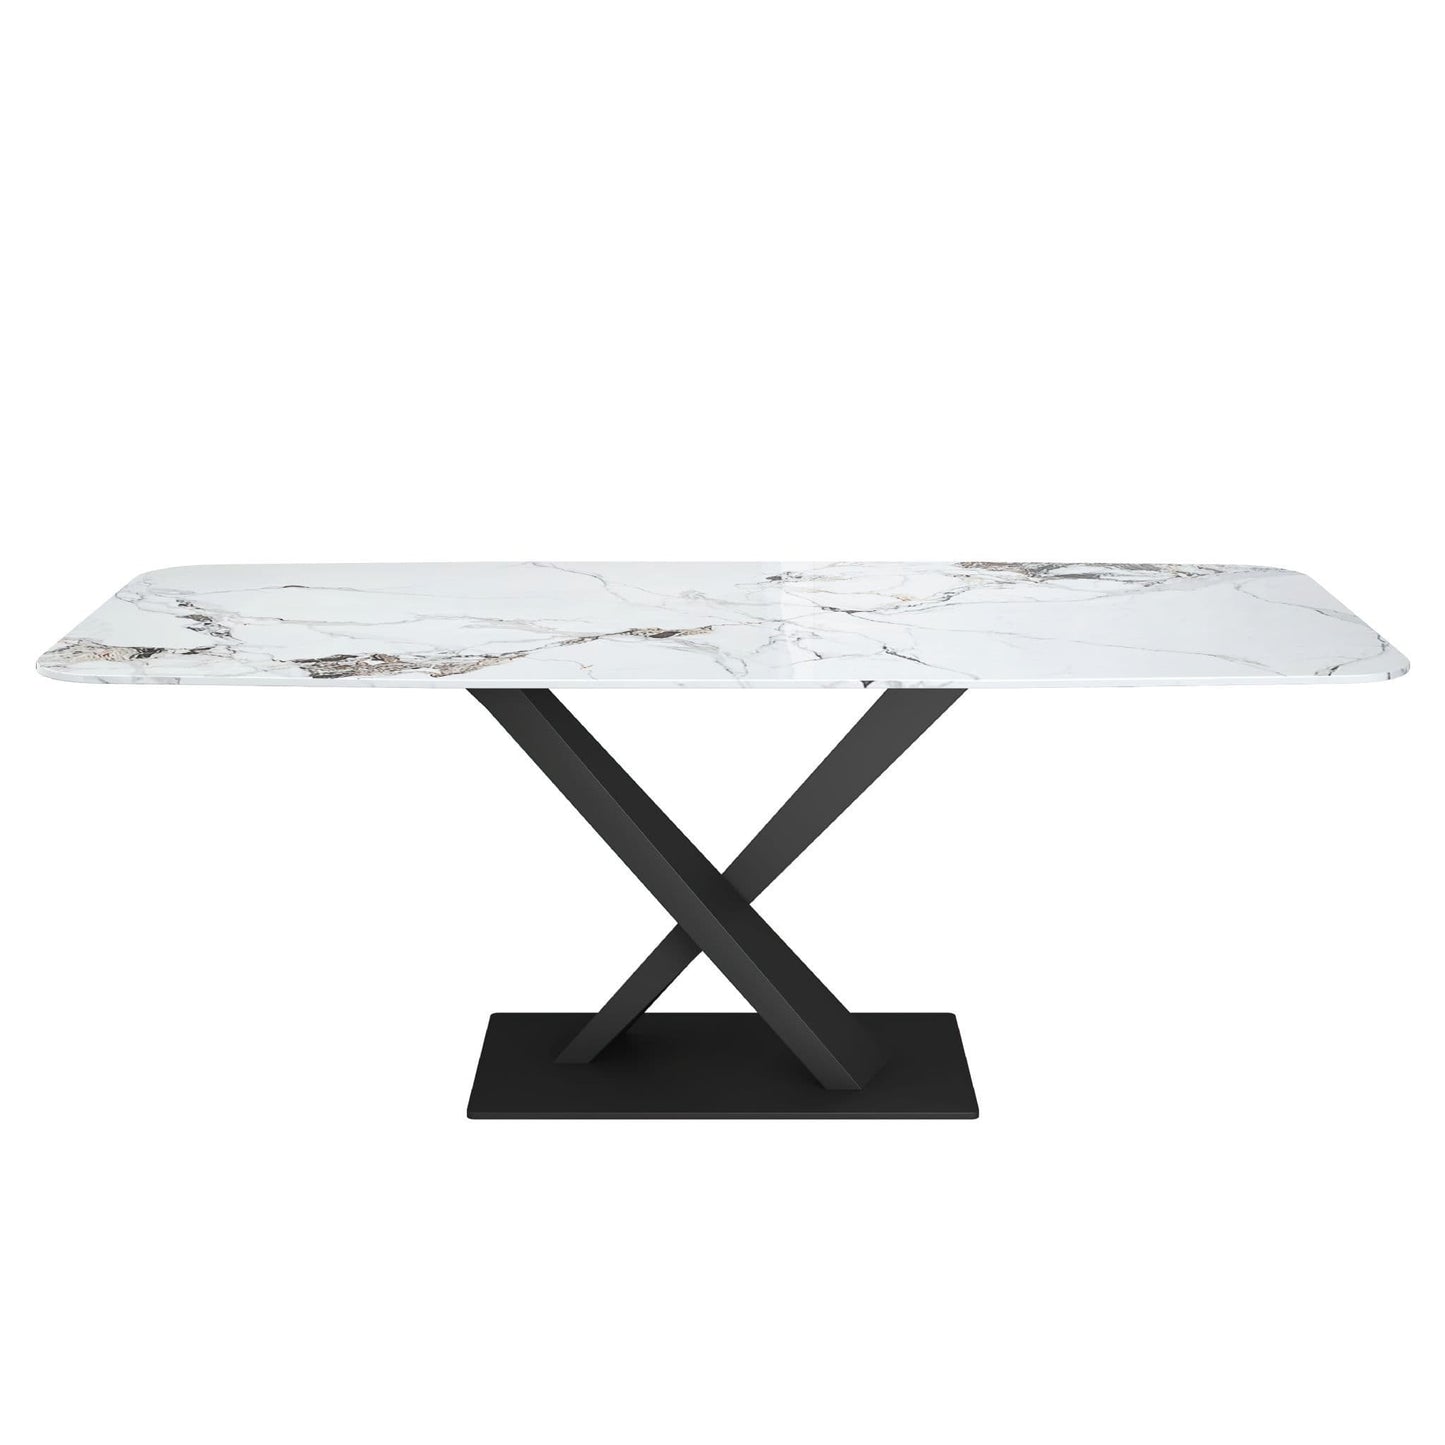 Alakananda White Sintered Stone Dining Table